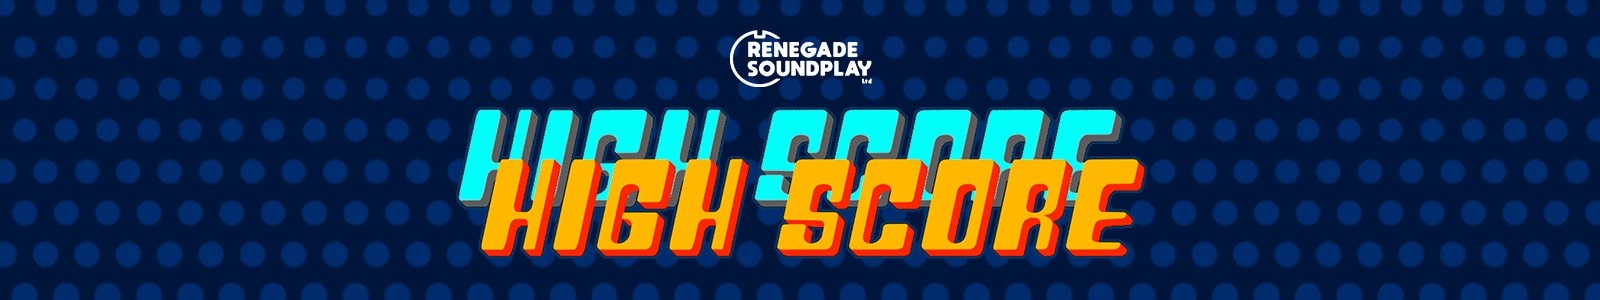 High Score by Renegade Soundplay